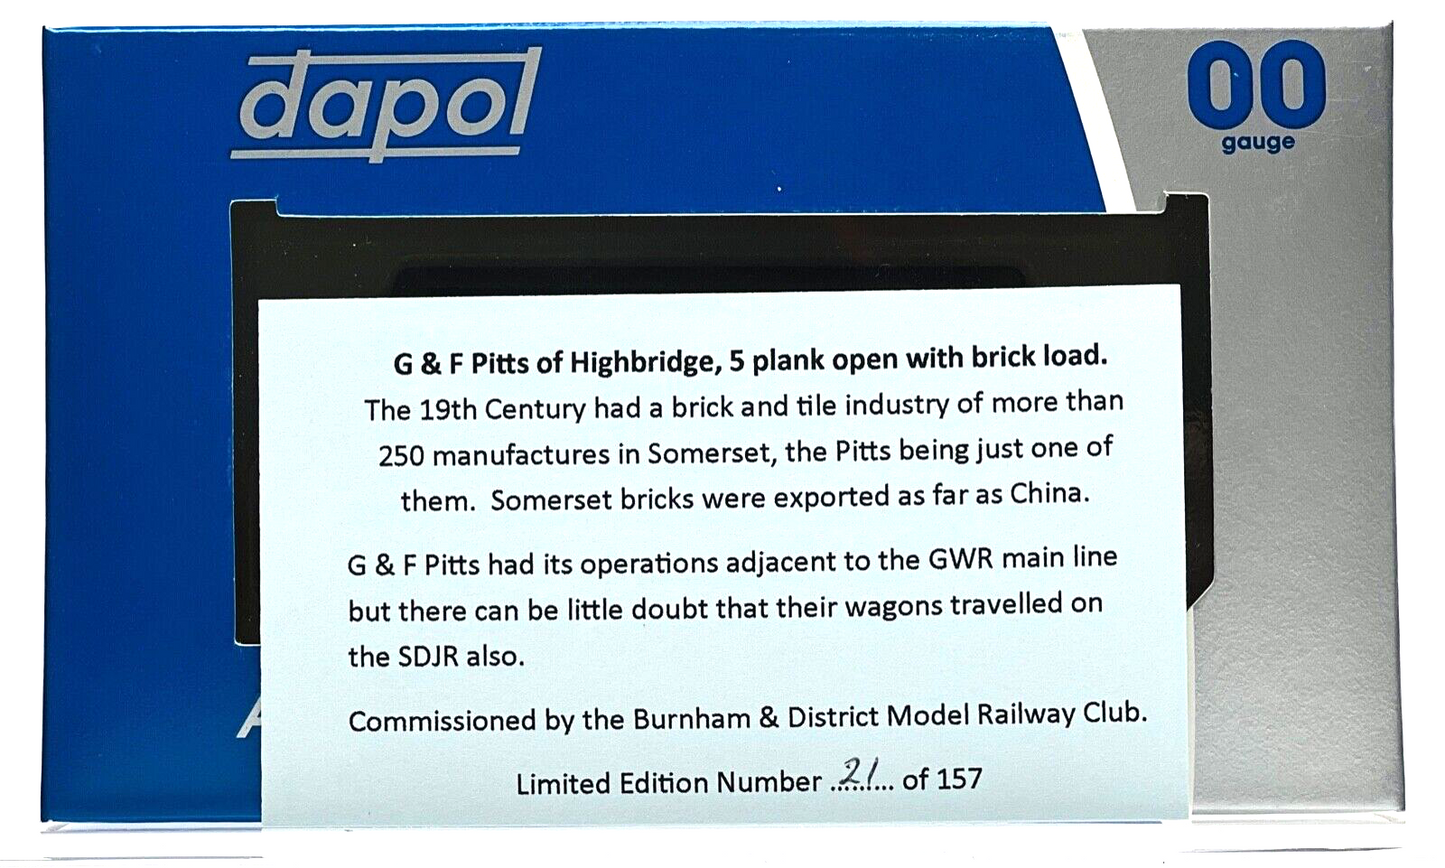 DAPOL 00 GAUGE - G & F PITTS HIGHBRIDGE BRICK TILE 14 (BURNHAM LIMITED EDITION)